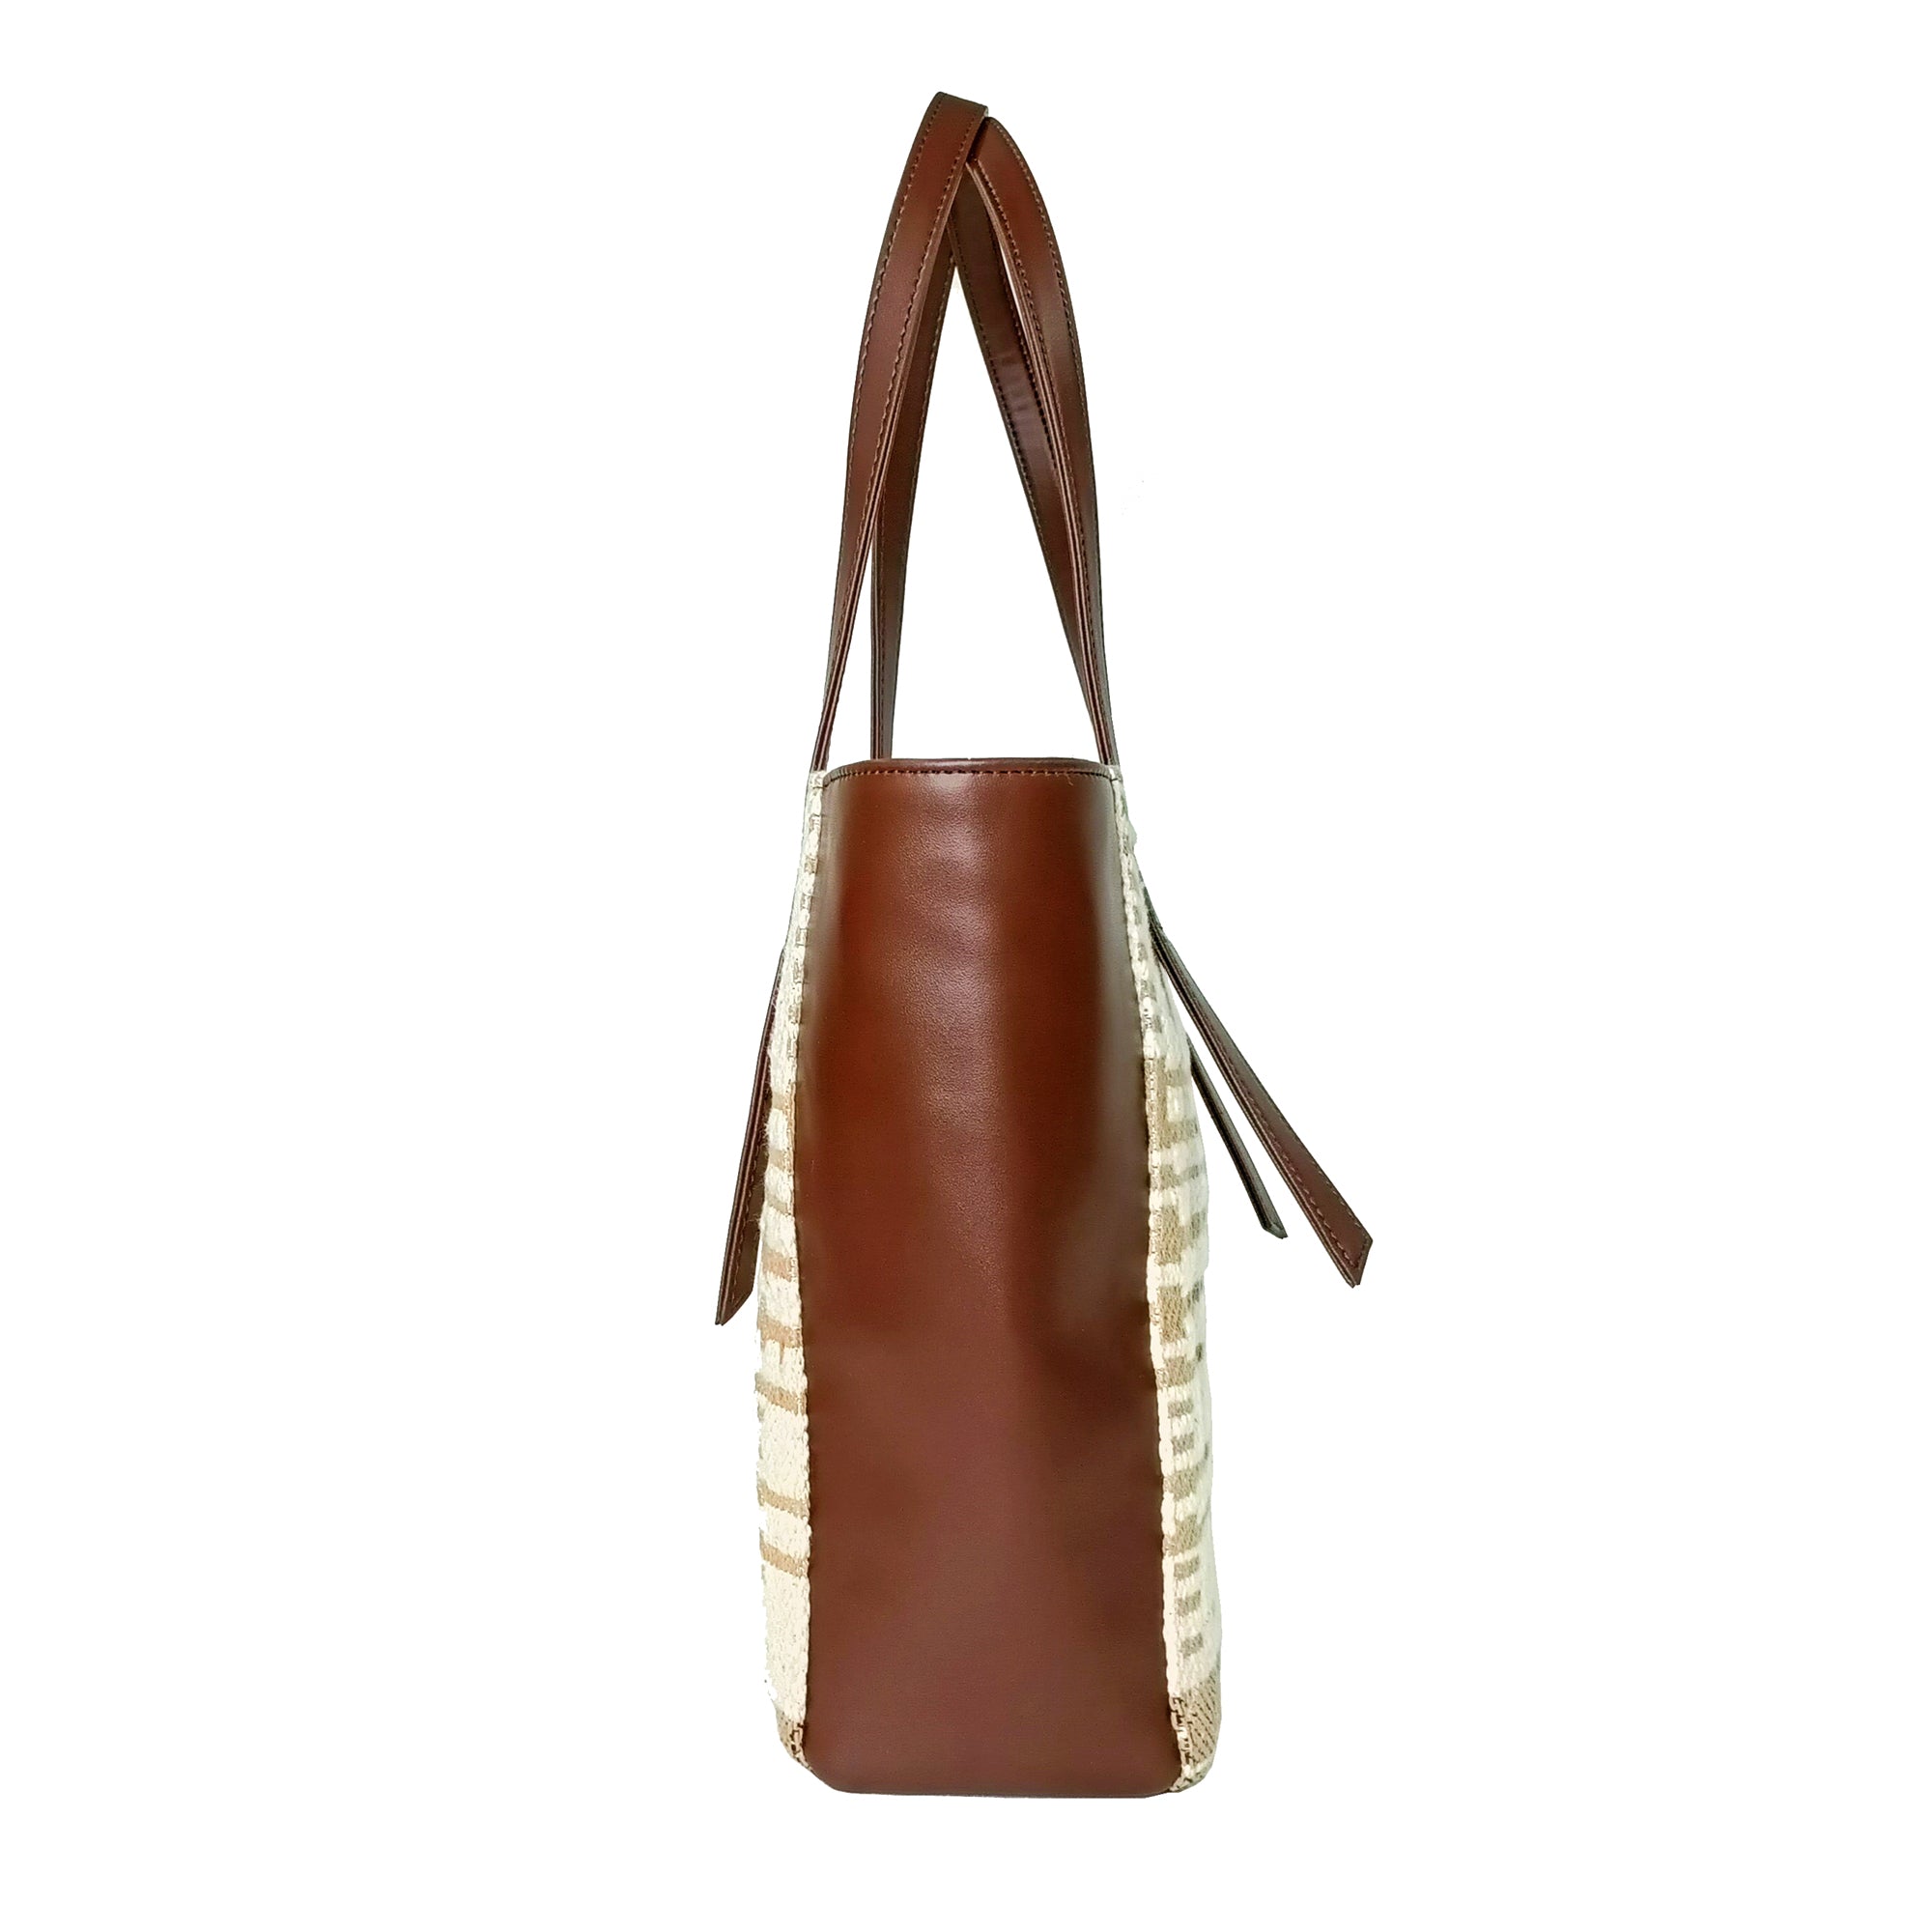 IMARS Stylish Handloom Tote Bag Brown for Women and Girls